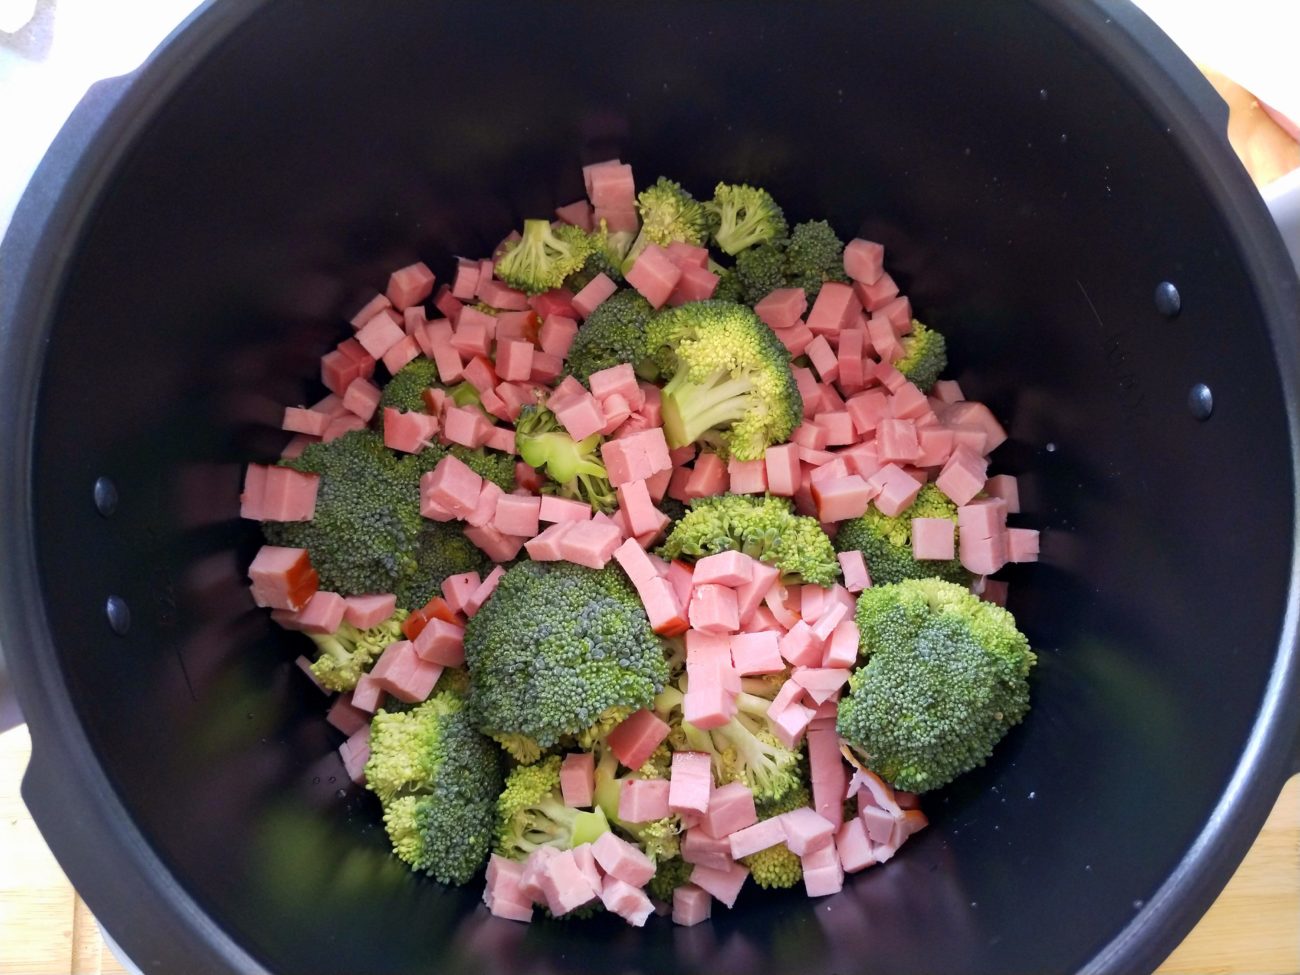 Broccoli-Schinken-Nudeln